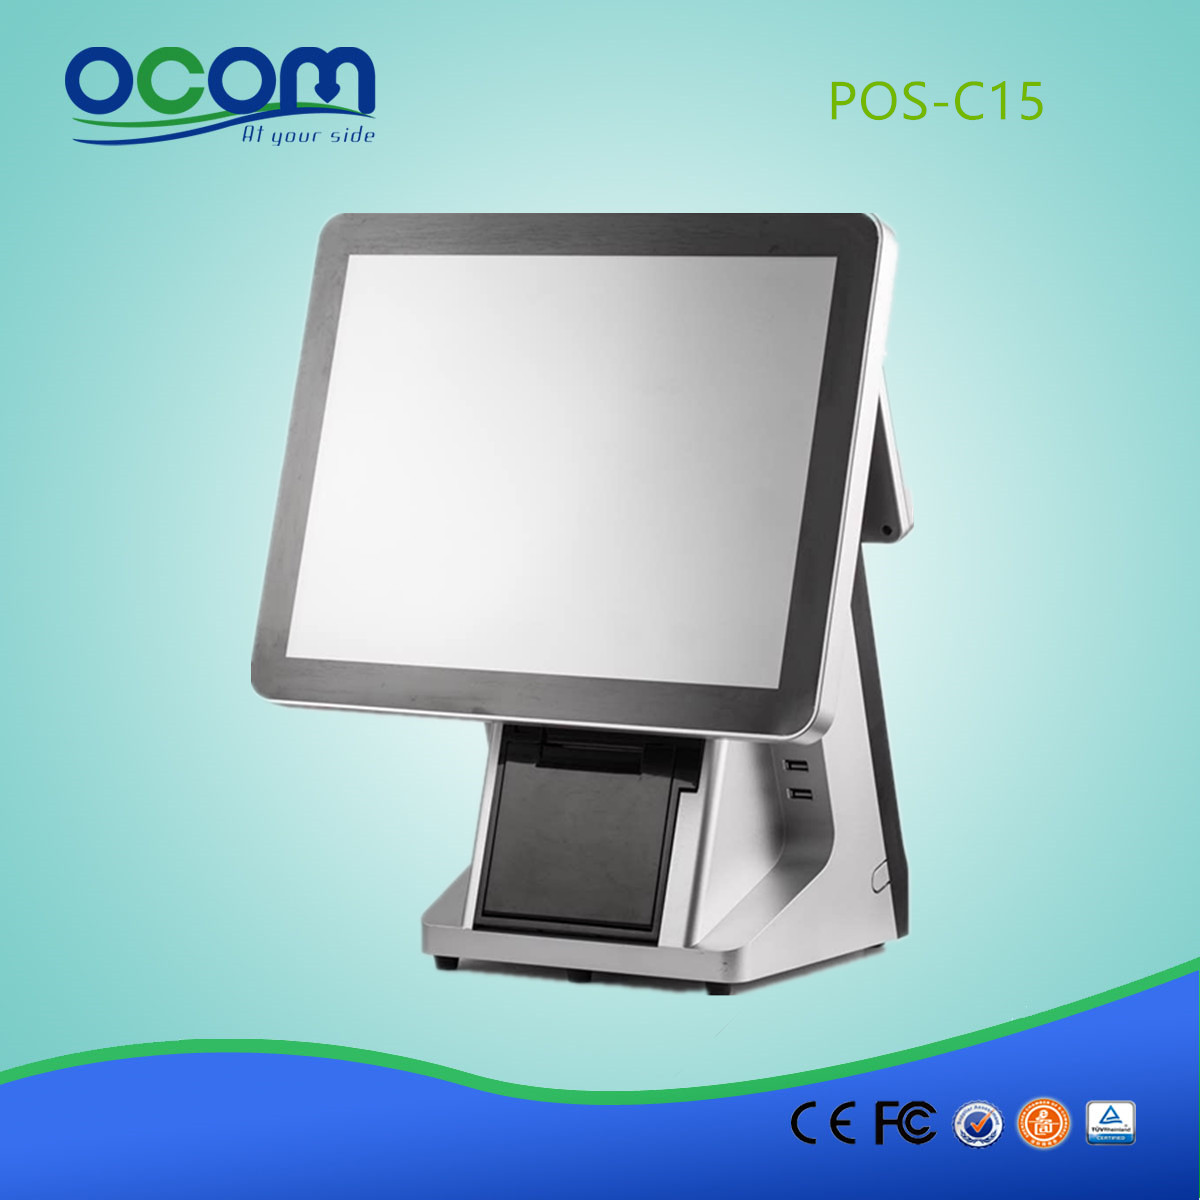 POS-C15-China fabriek J1900 32 G SSD 15 "alles in een touchscreen POS-terminal prijs